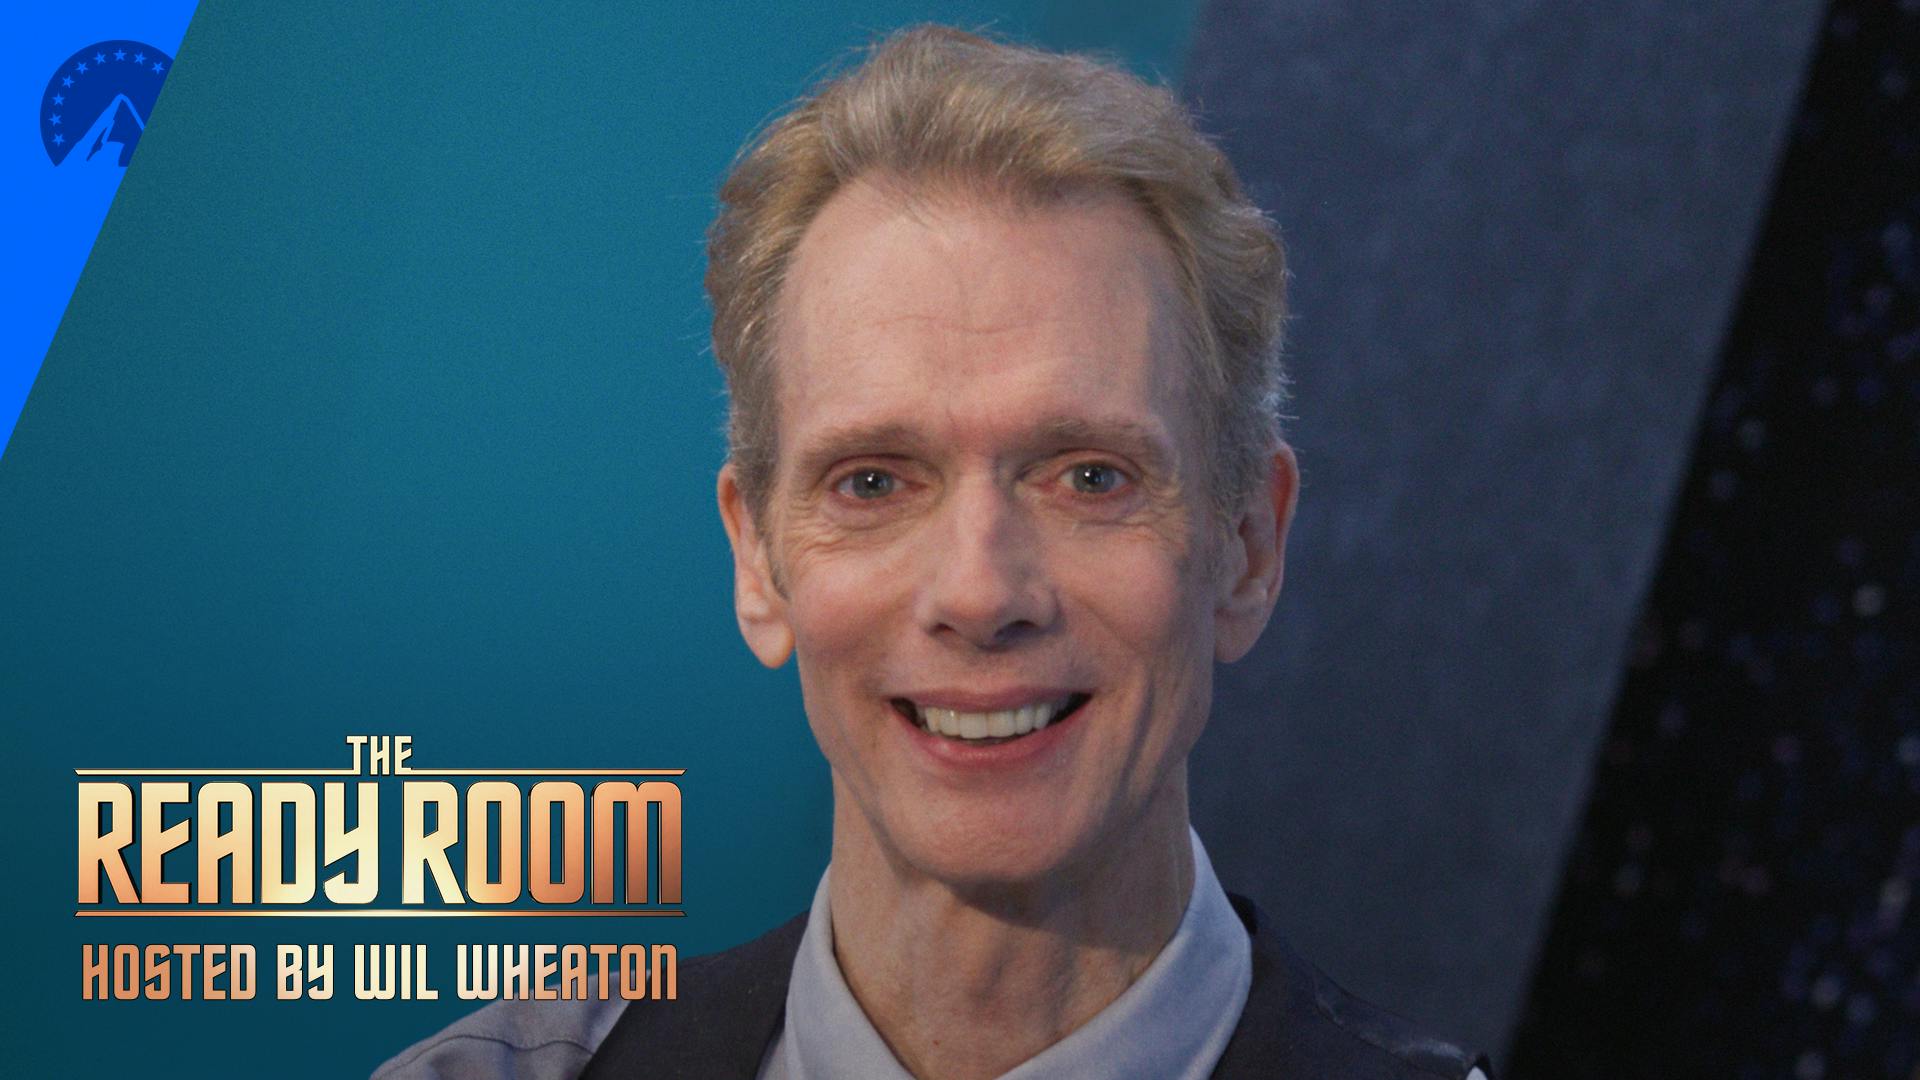 Doug Jones joins The Ready Room to talk Discovery's Season 5 premiere